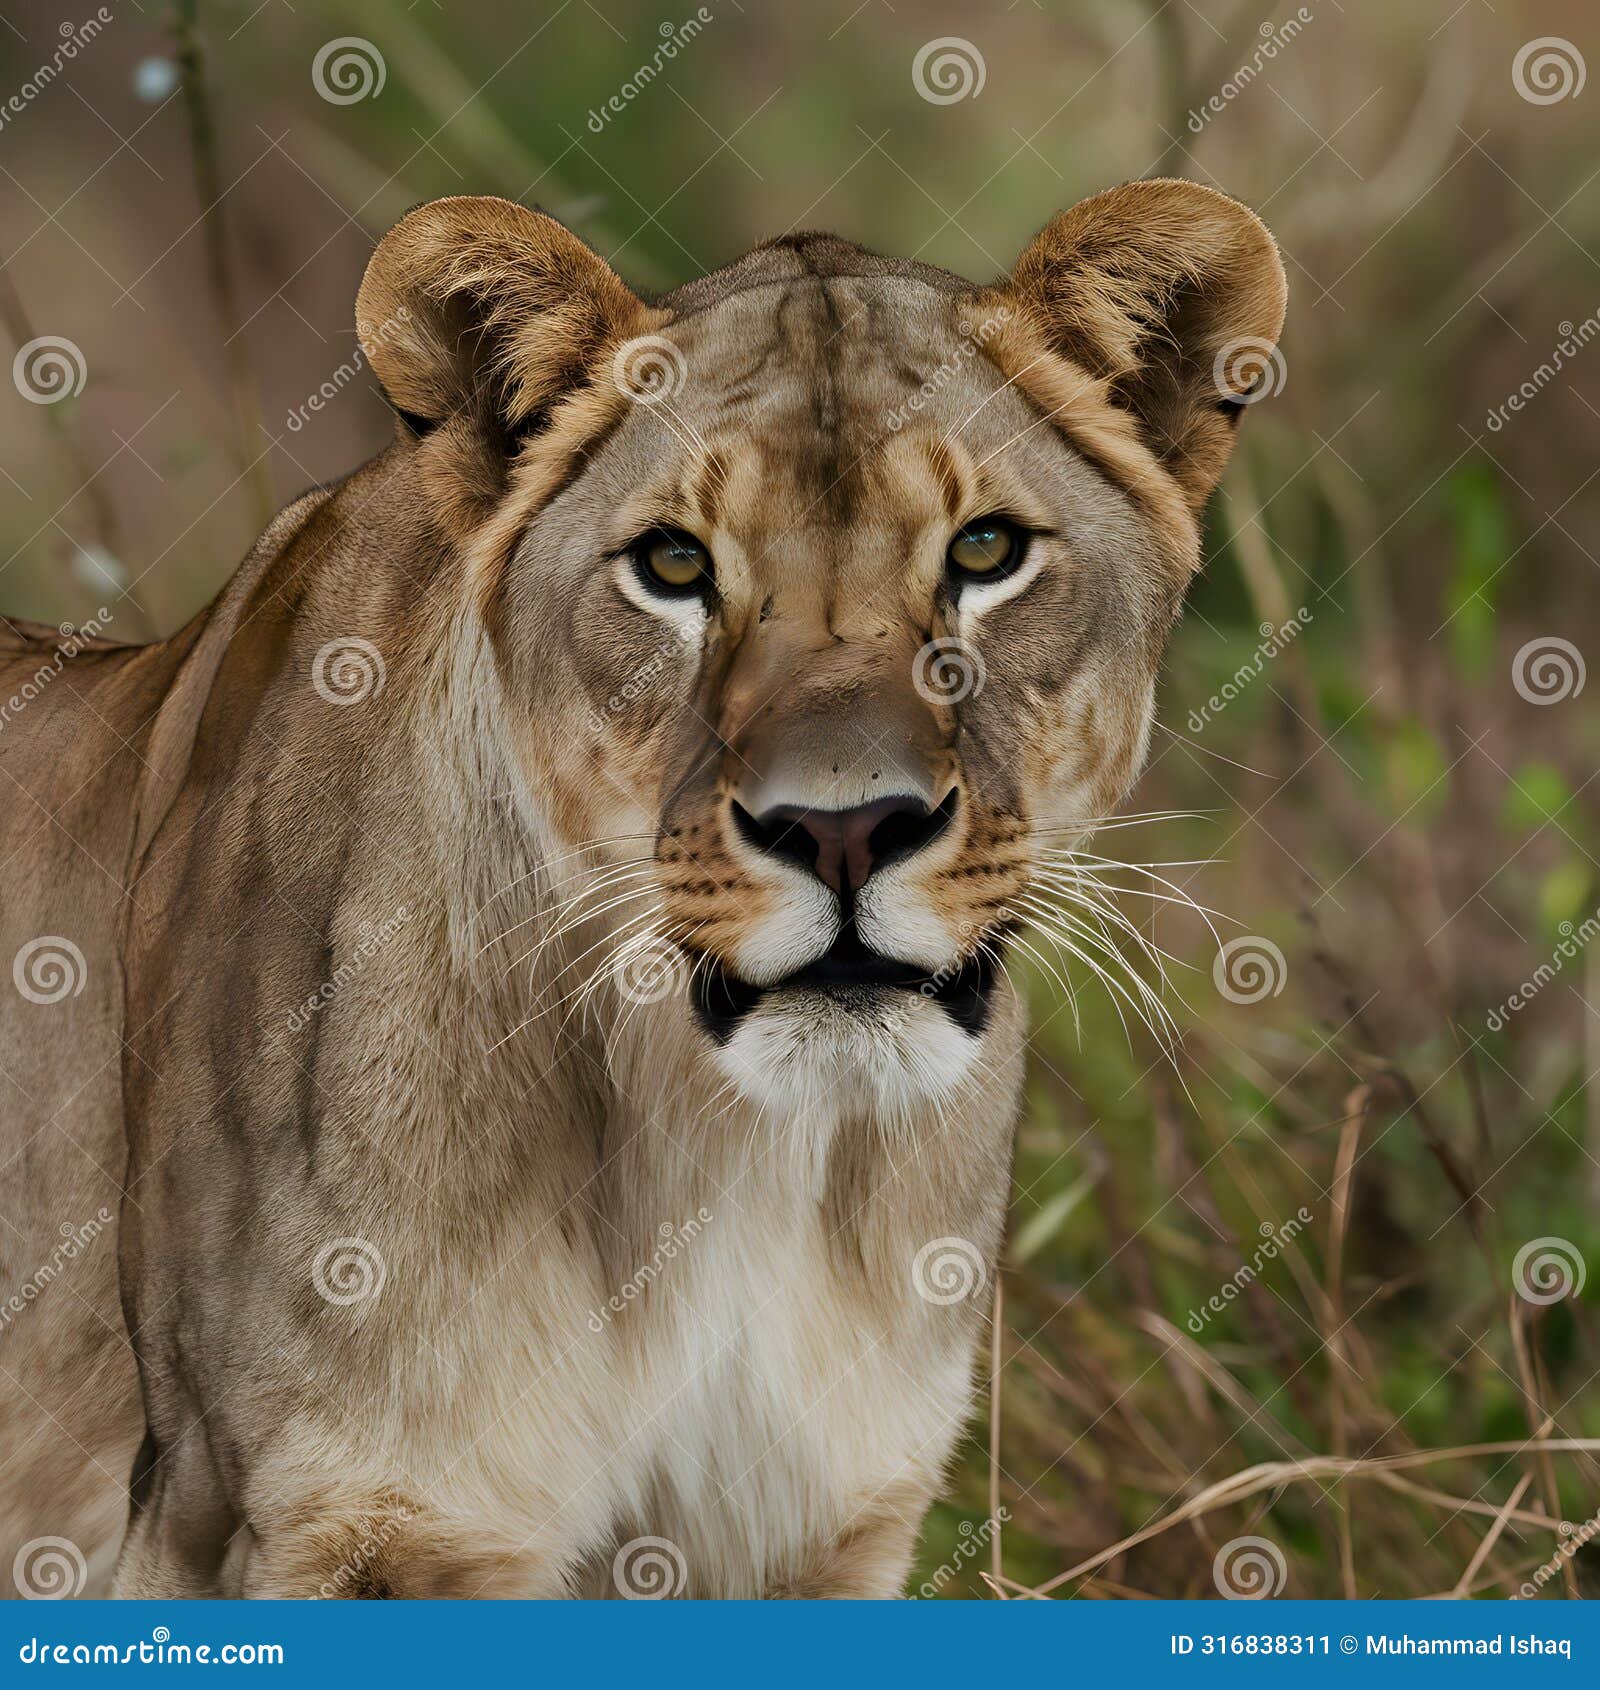 alert lioness surveys wilderness surroundings with intense focus